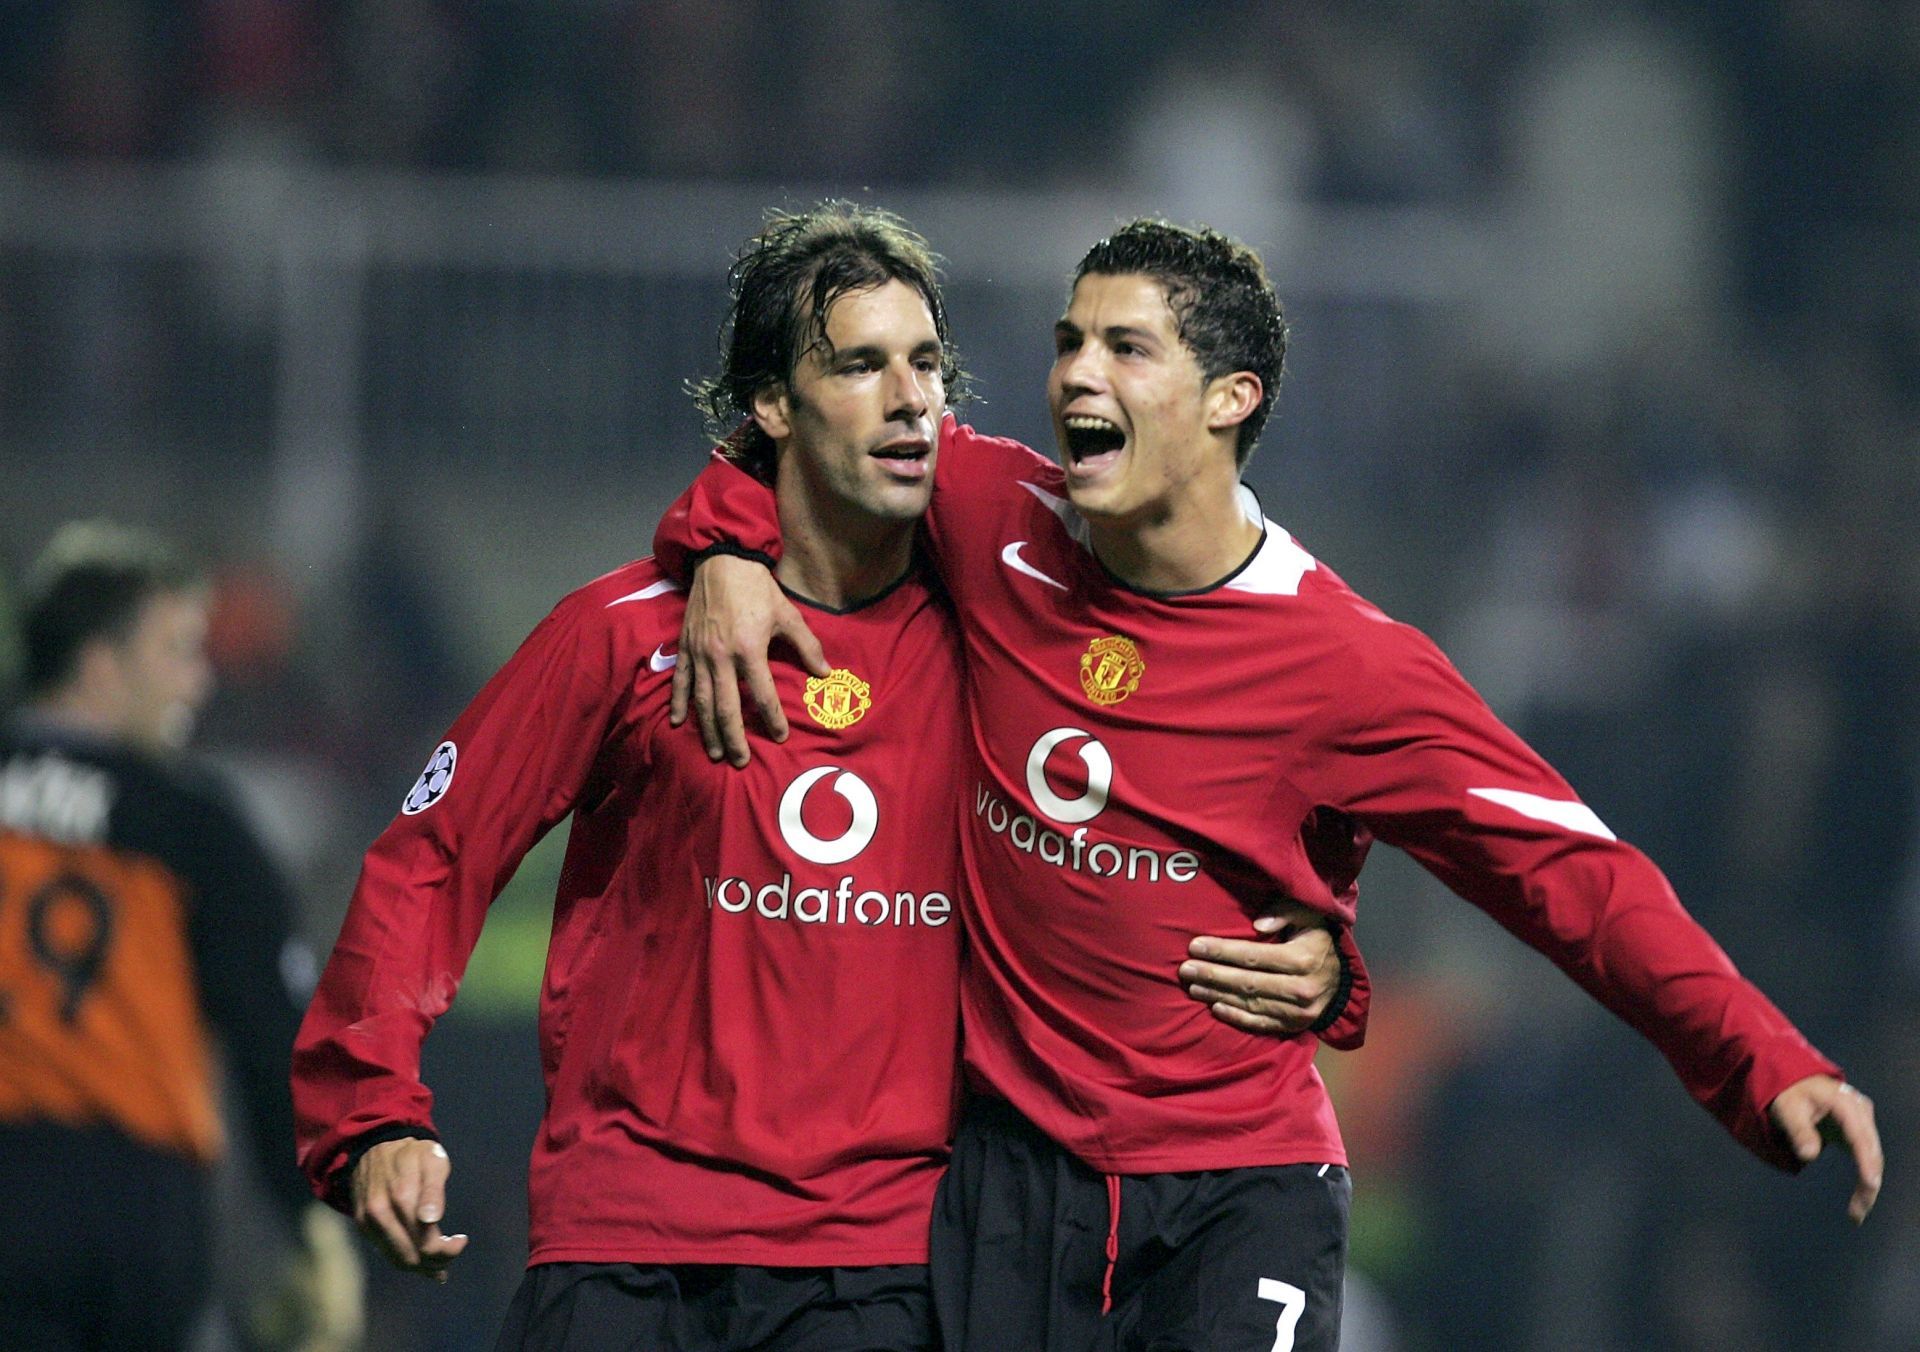 Ronaldo and Van Nistelrooy had a fallout at Manchester United